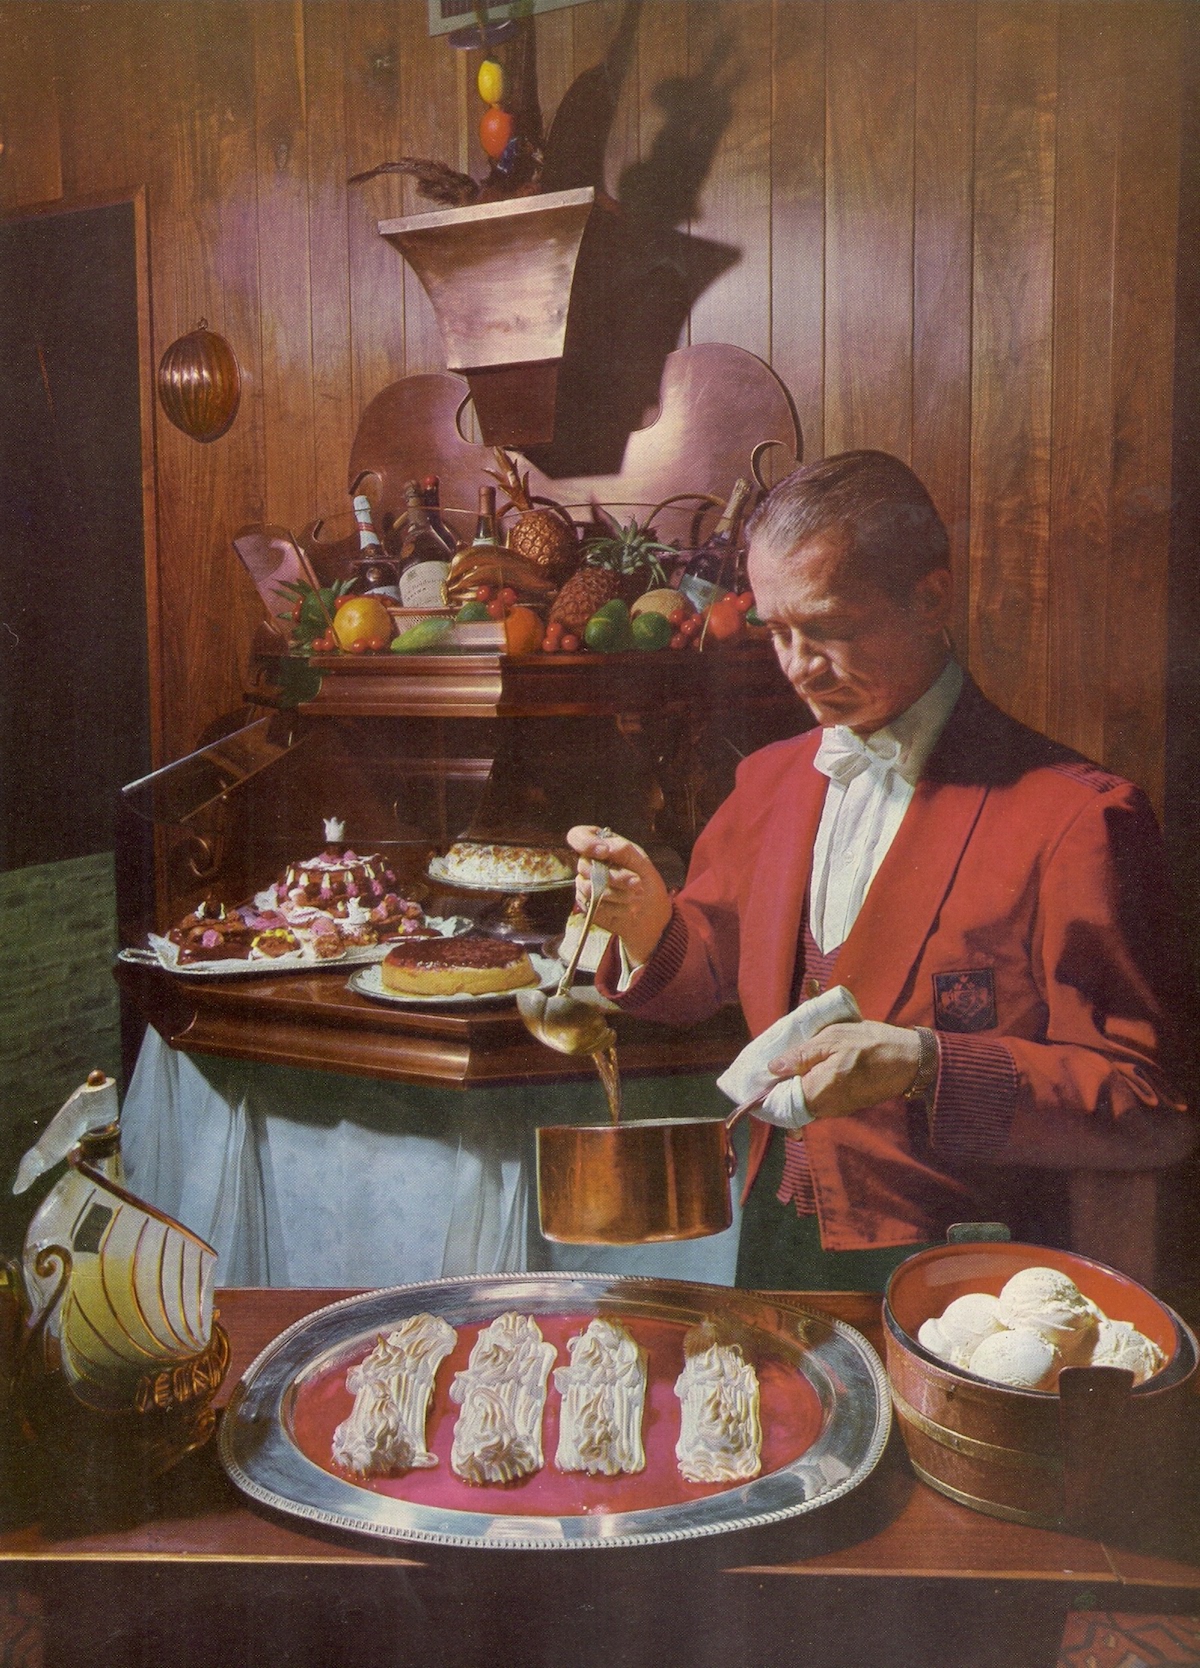 Scandia Restaurant, 1958 Hollywood, California cookbook